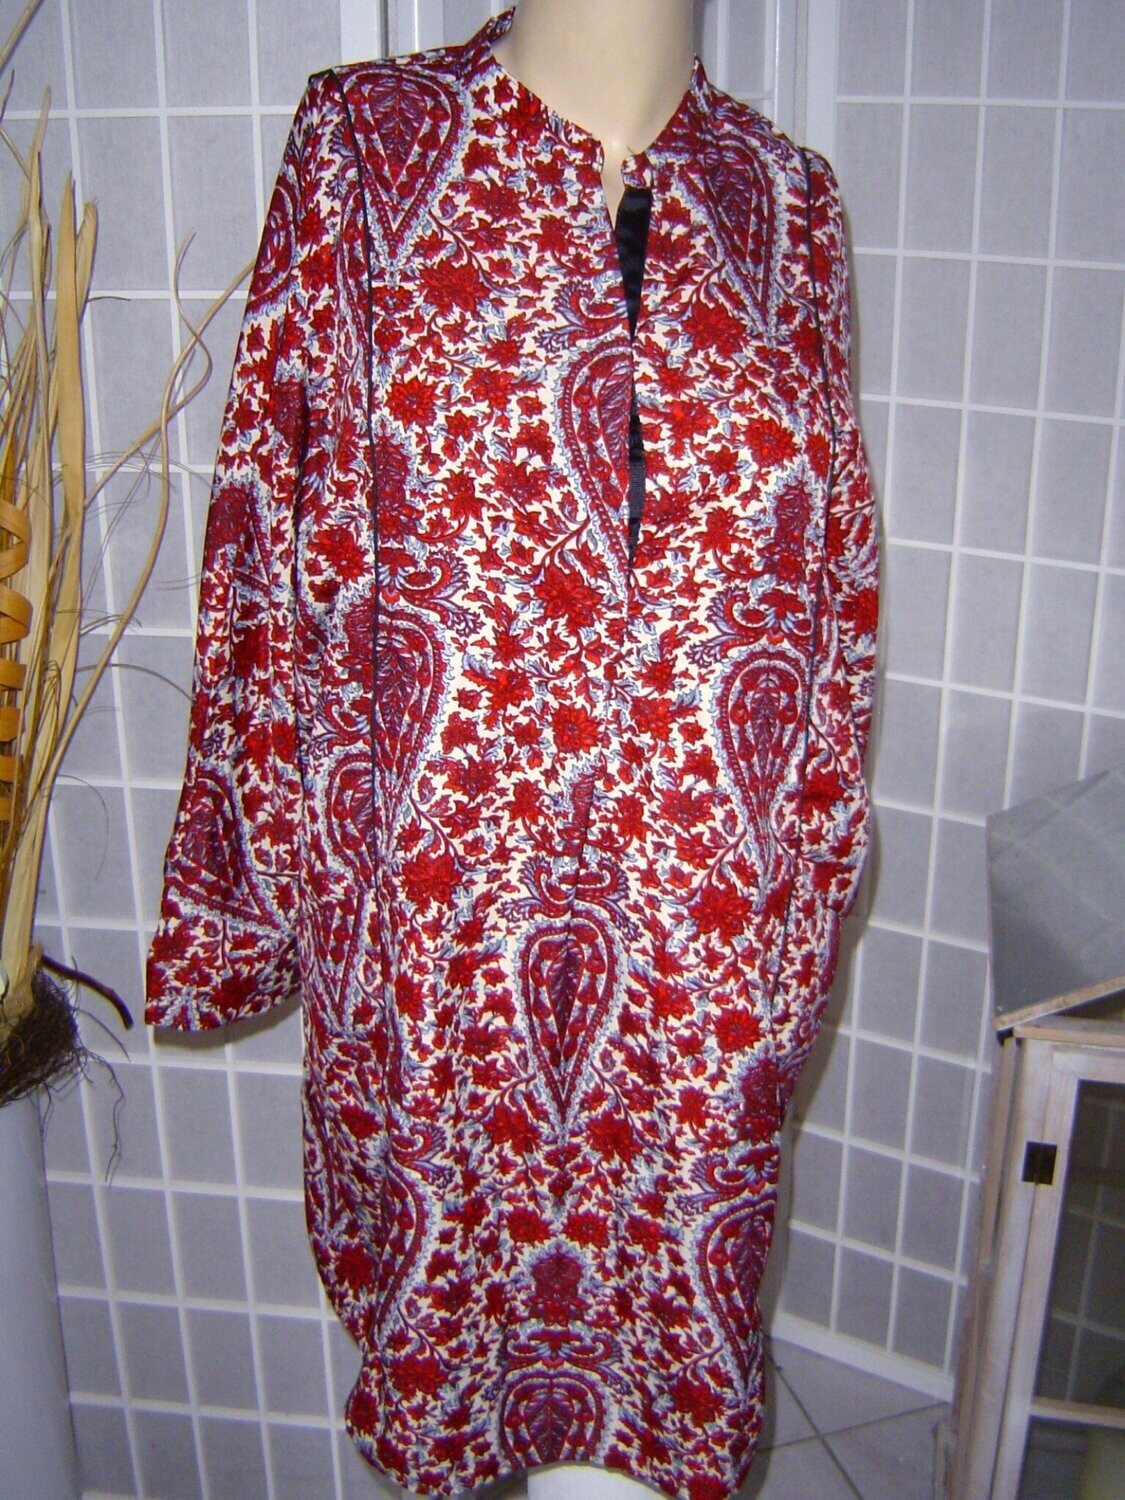 MISS K Damen Tunika Bluse Gr. 38, 40 rot floral gemustert Longbluse